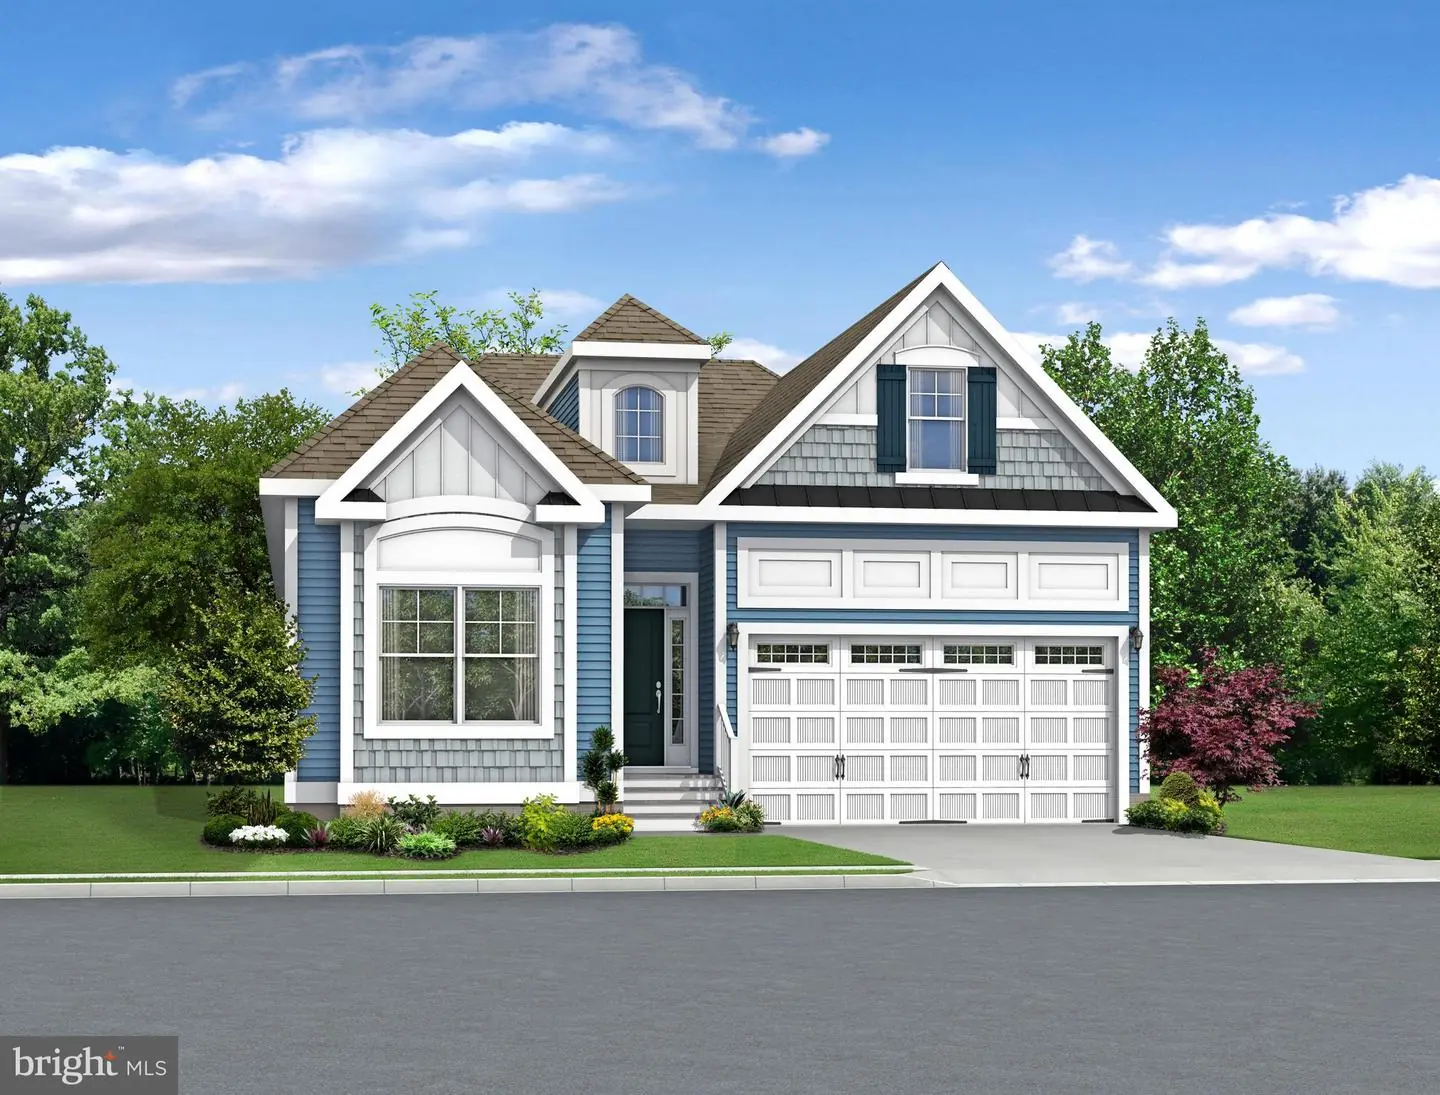 DESU2031076-801956180412-2024-01-30-16-56-08 Bluebell To-be-built Home Tbd | Millsboro, DE Real Estate For Sale | MLS# Desu2031076  - David T. King Realtor